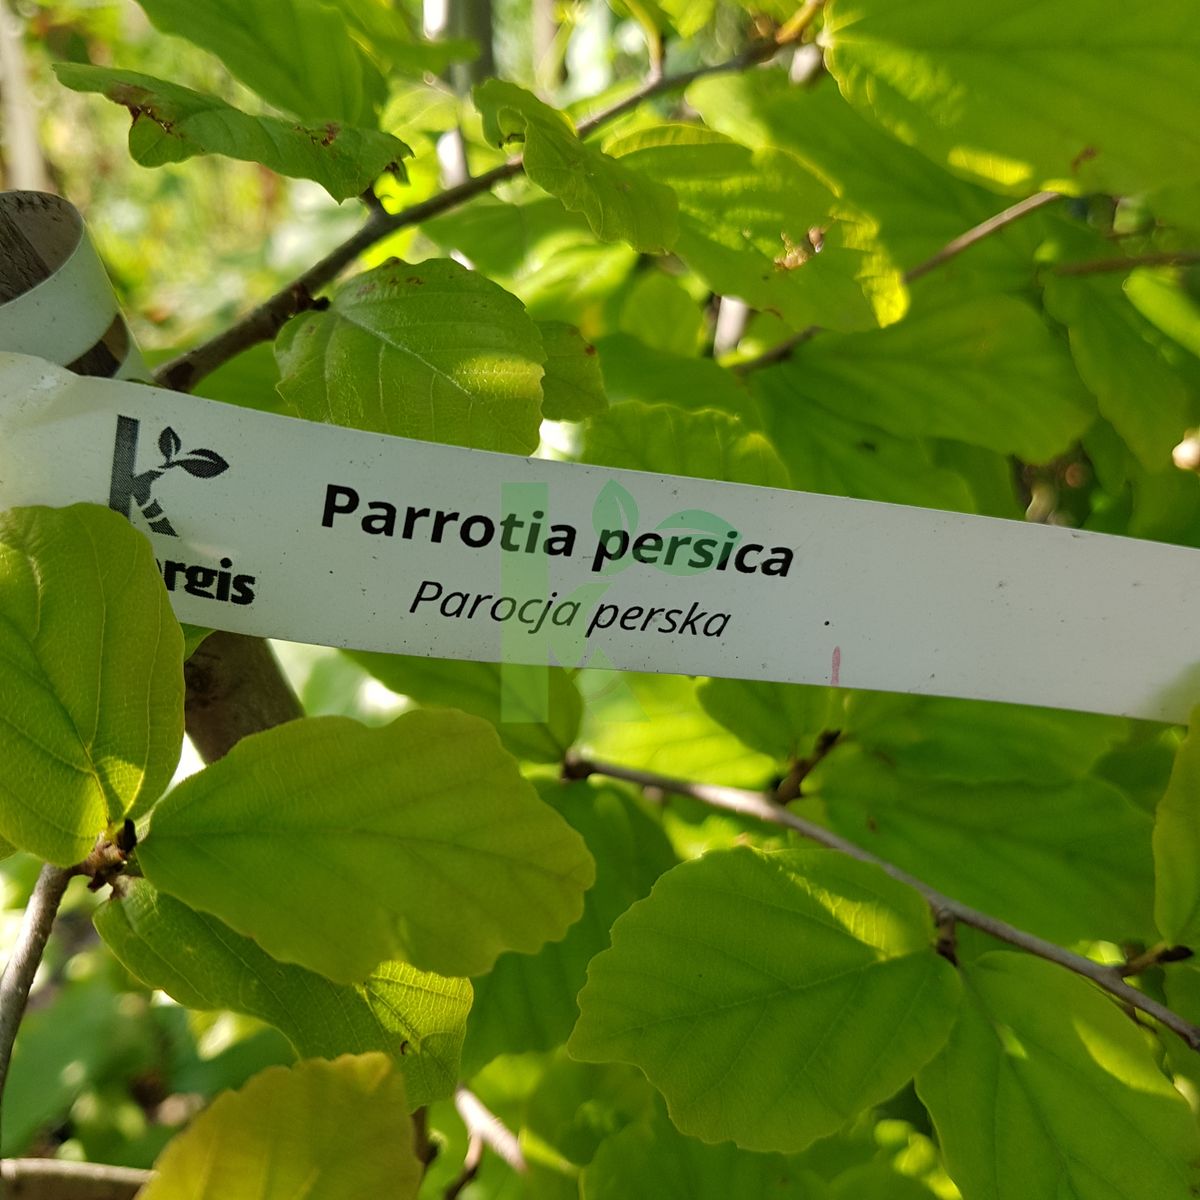 Parrotia persica (Parocja perska)